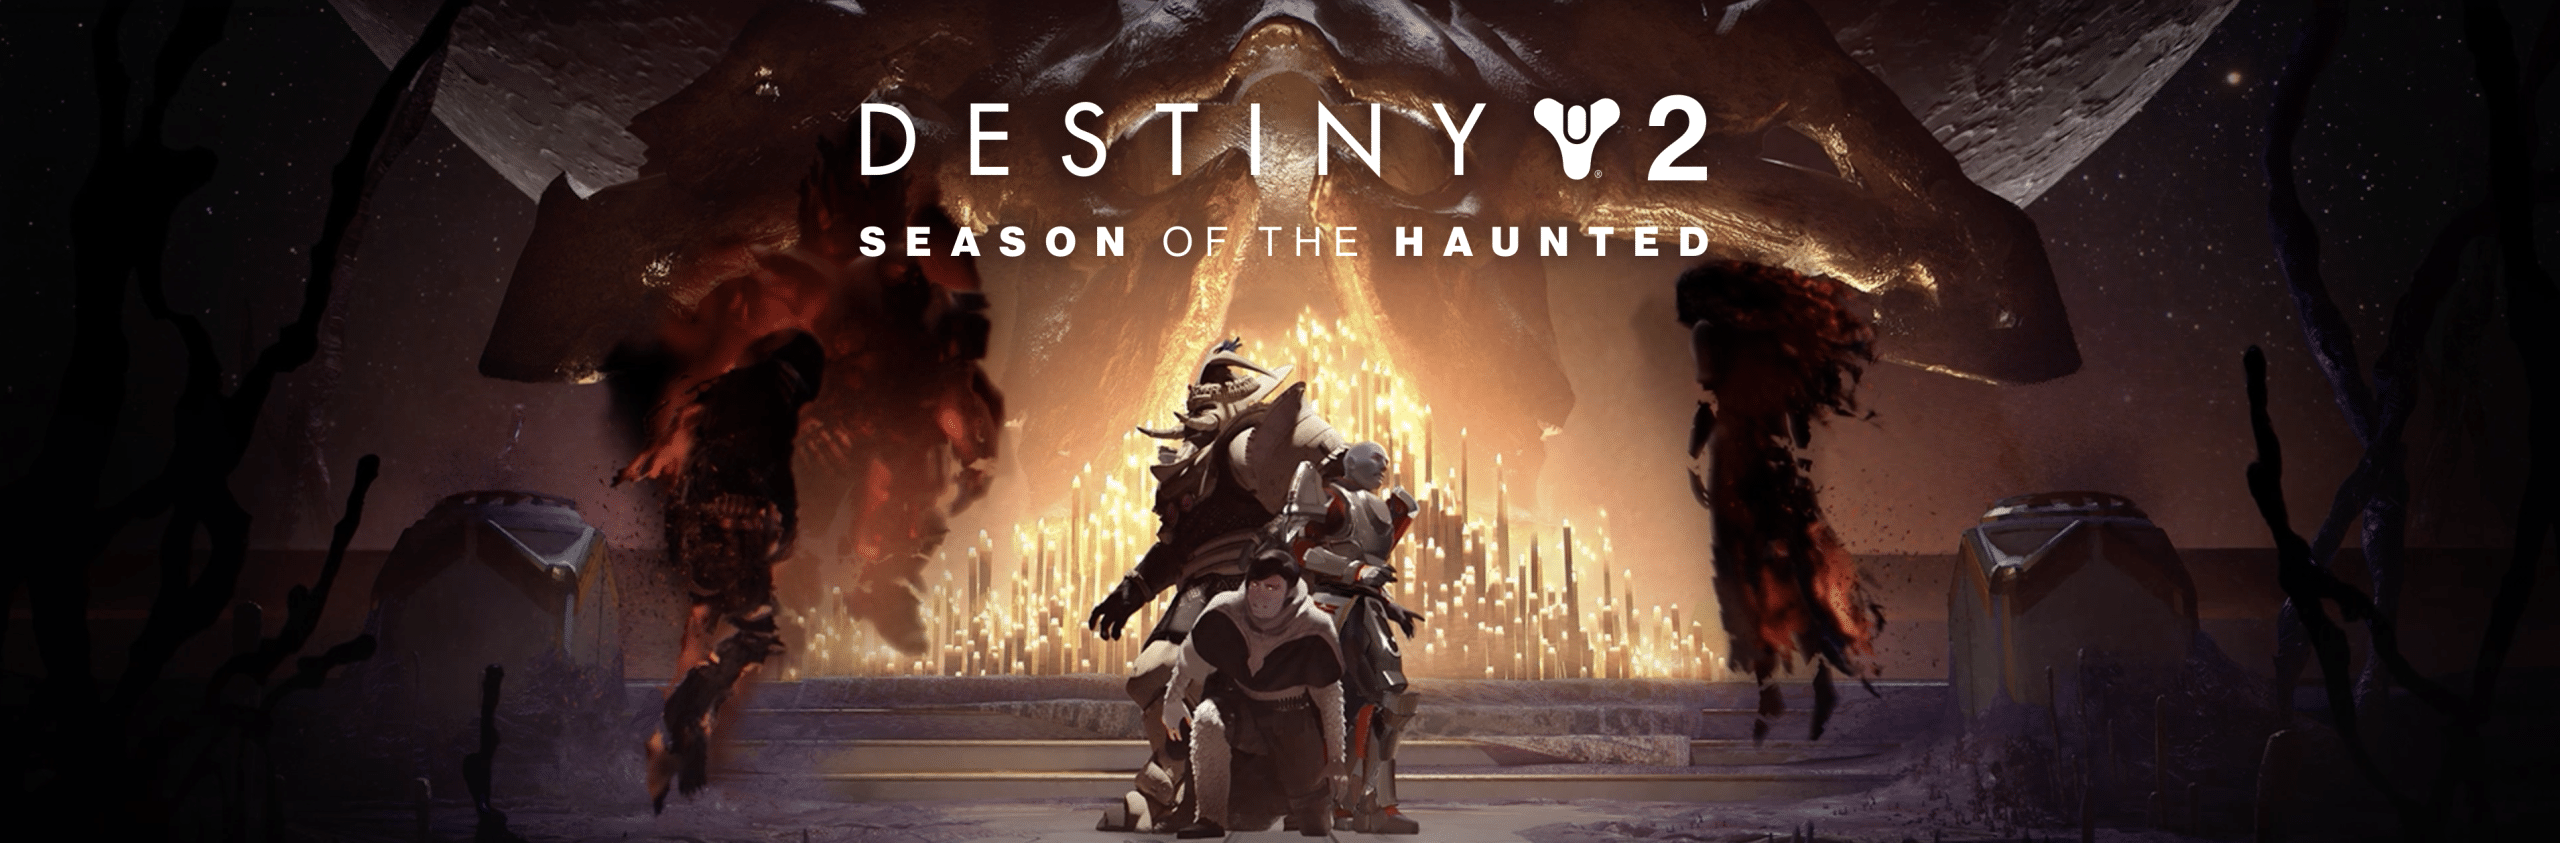 Destiny 2 Season of the Haunted Trailer Released 1